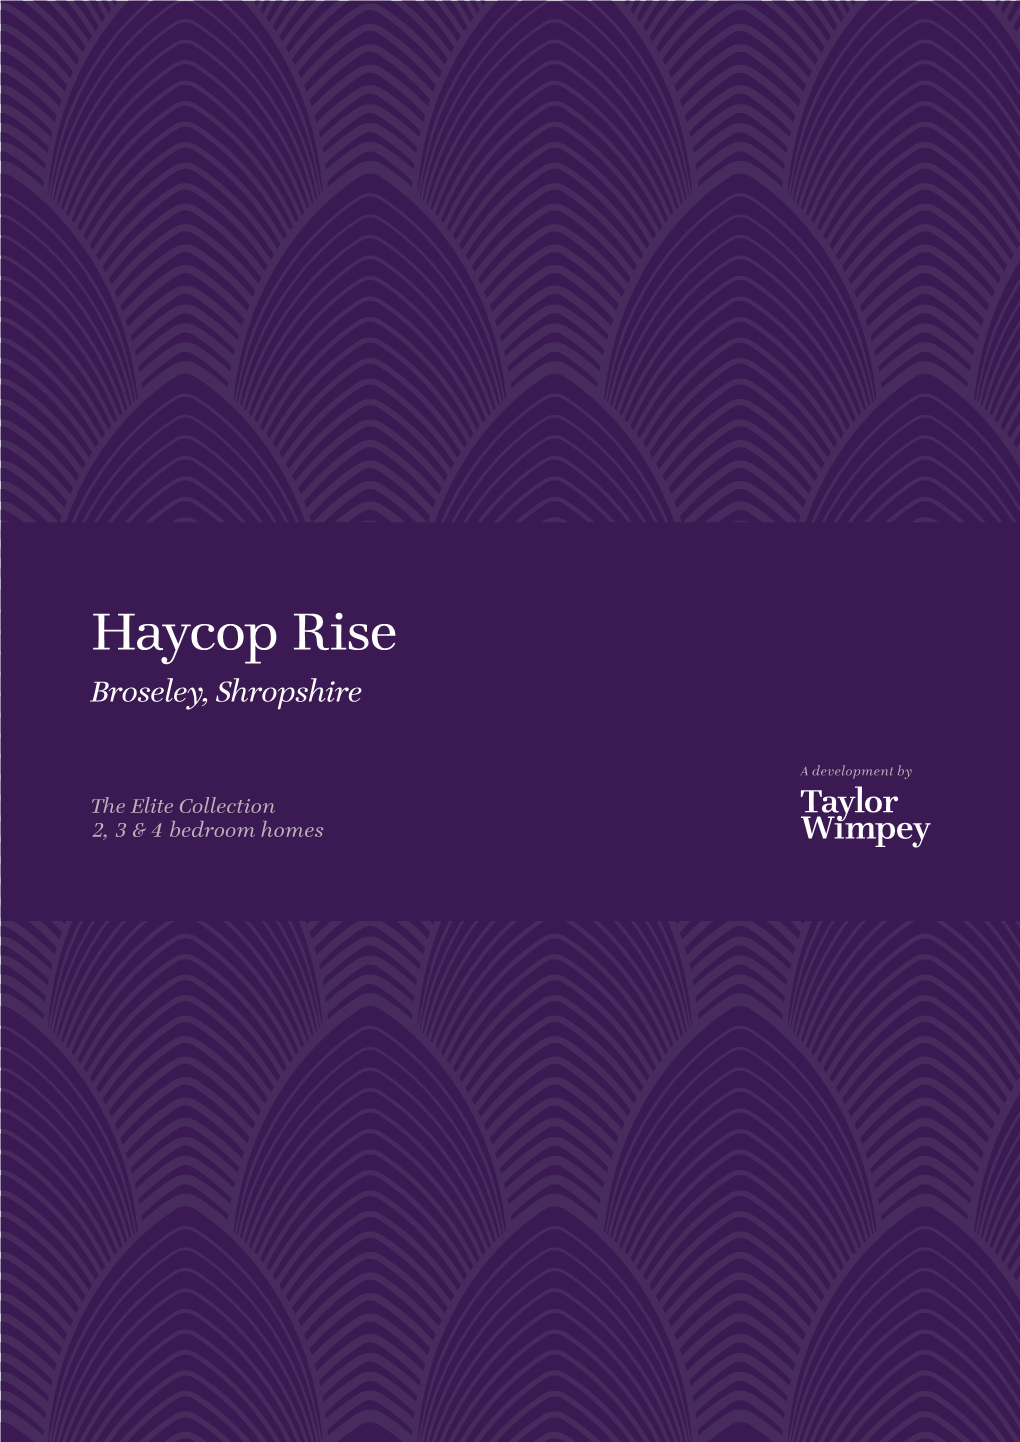 Haycop Rise Broseley, Shropshire